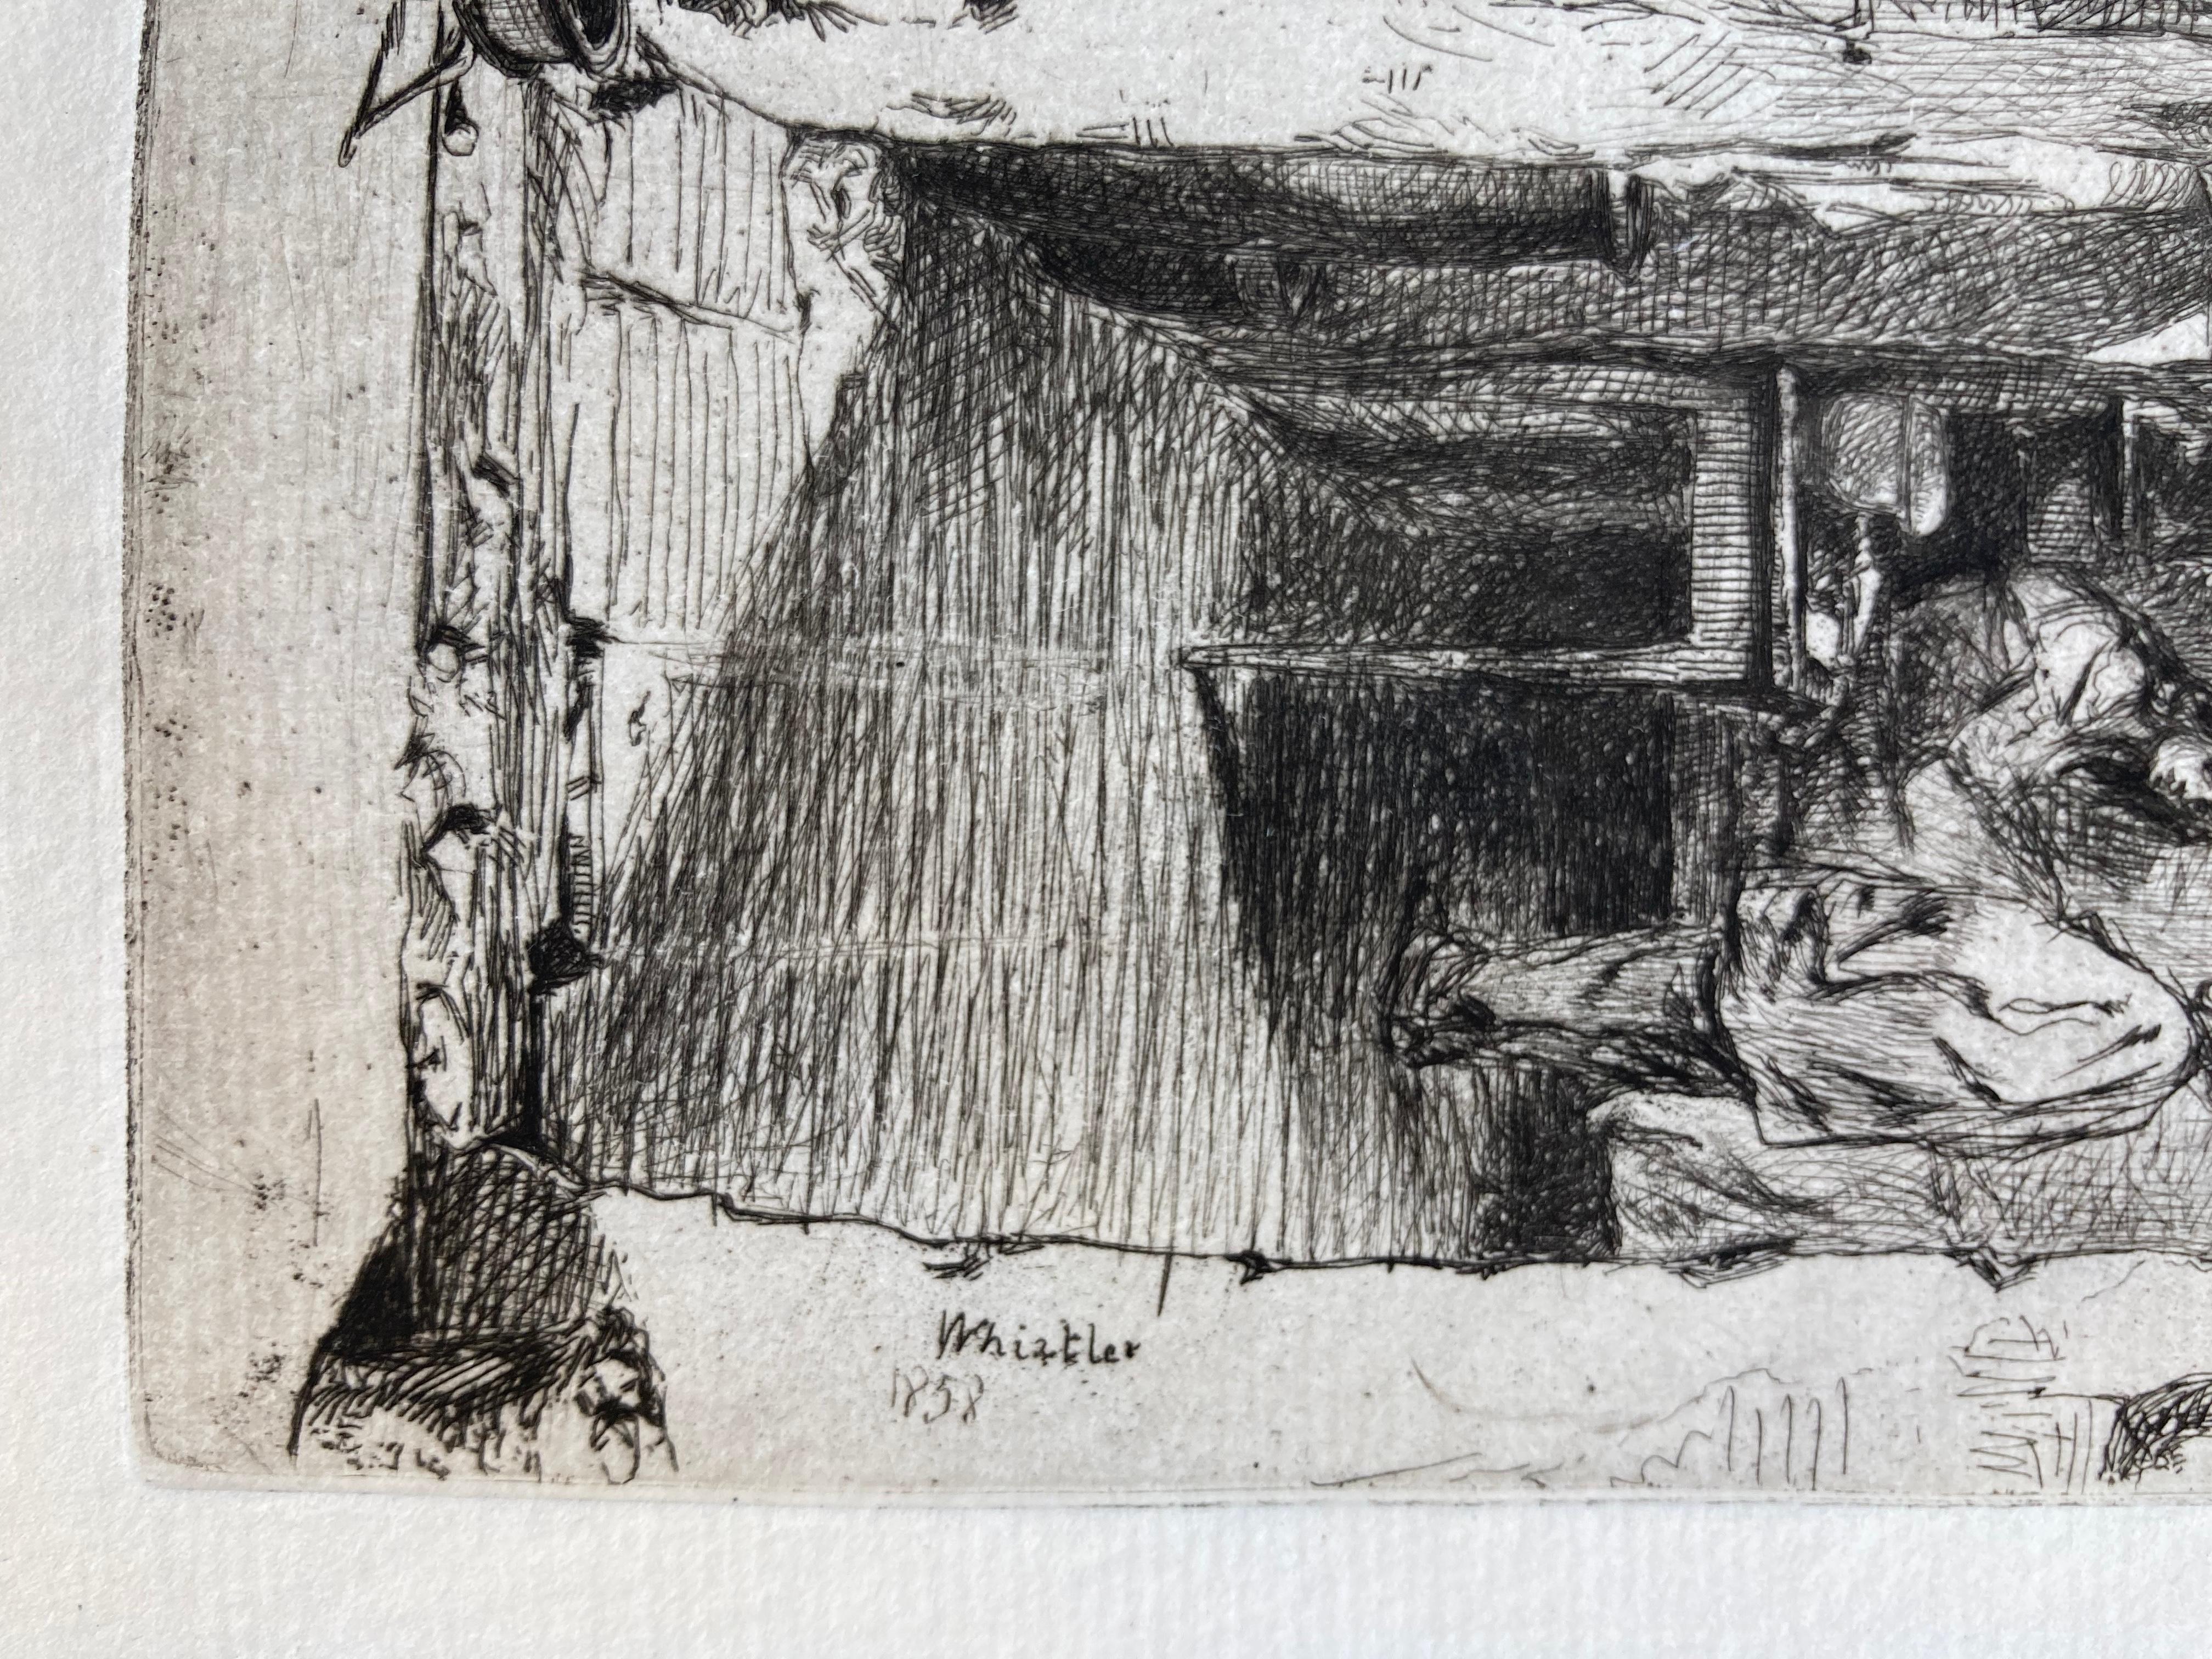 RAG GATHERERS - Print by James Abbott McNeill Whistler